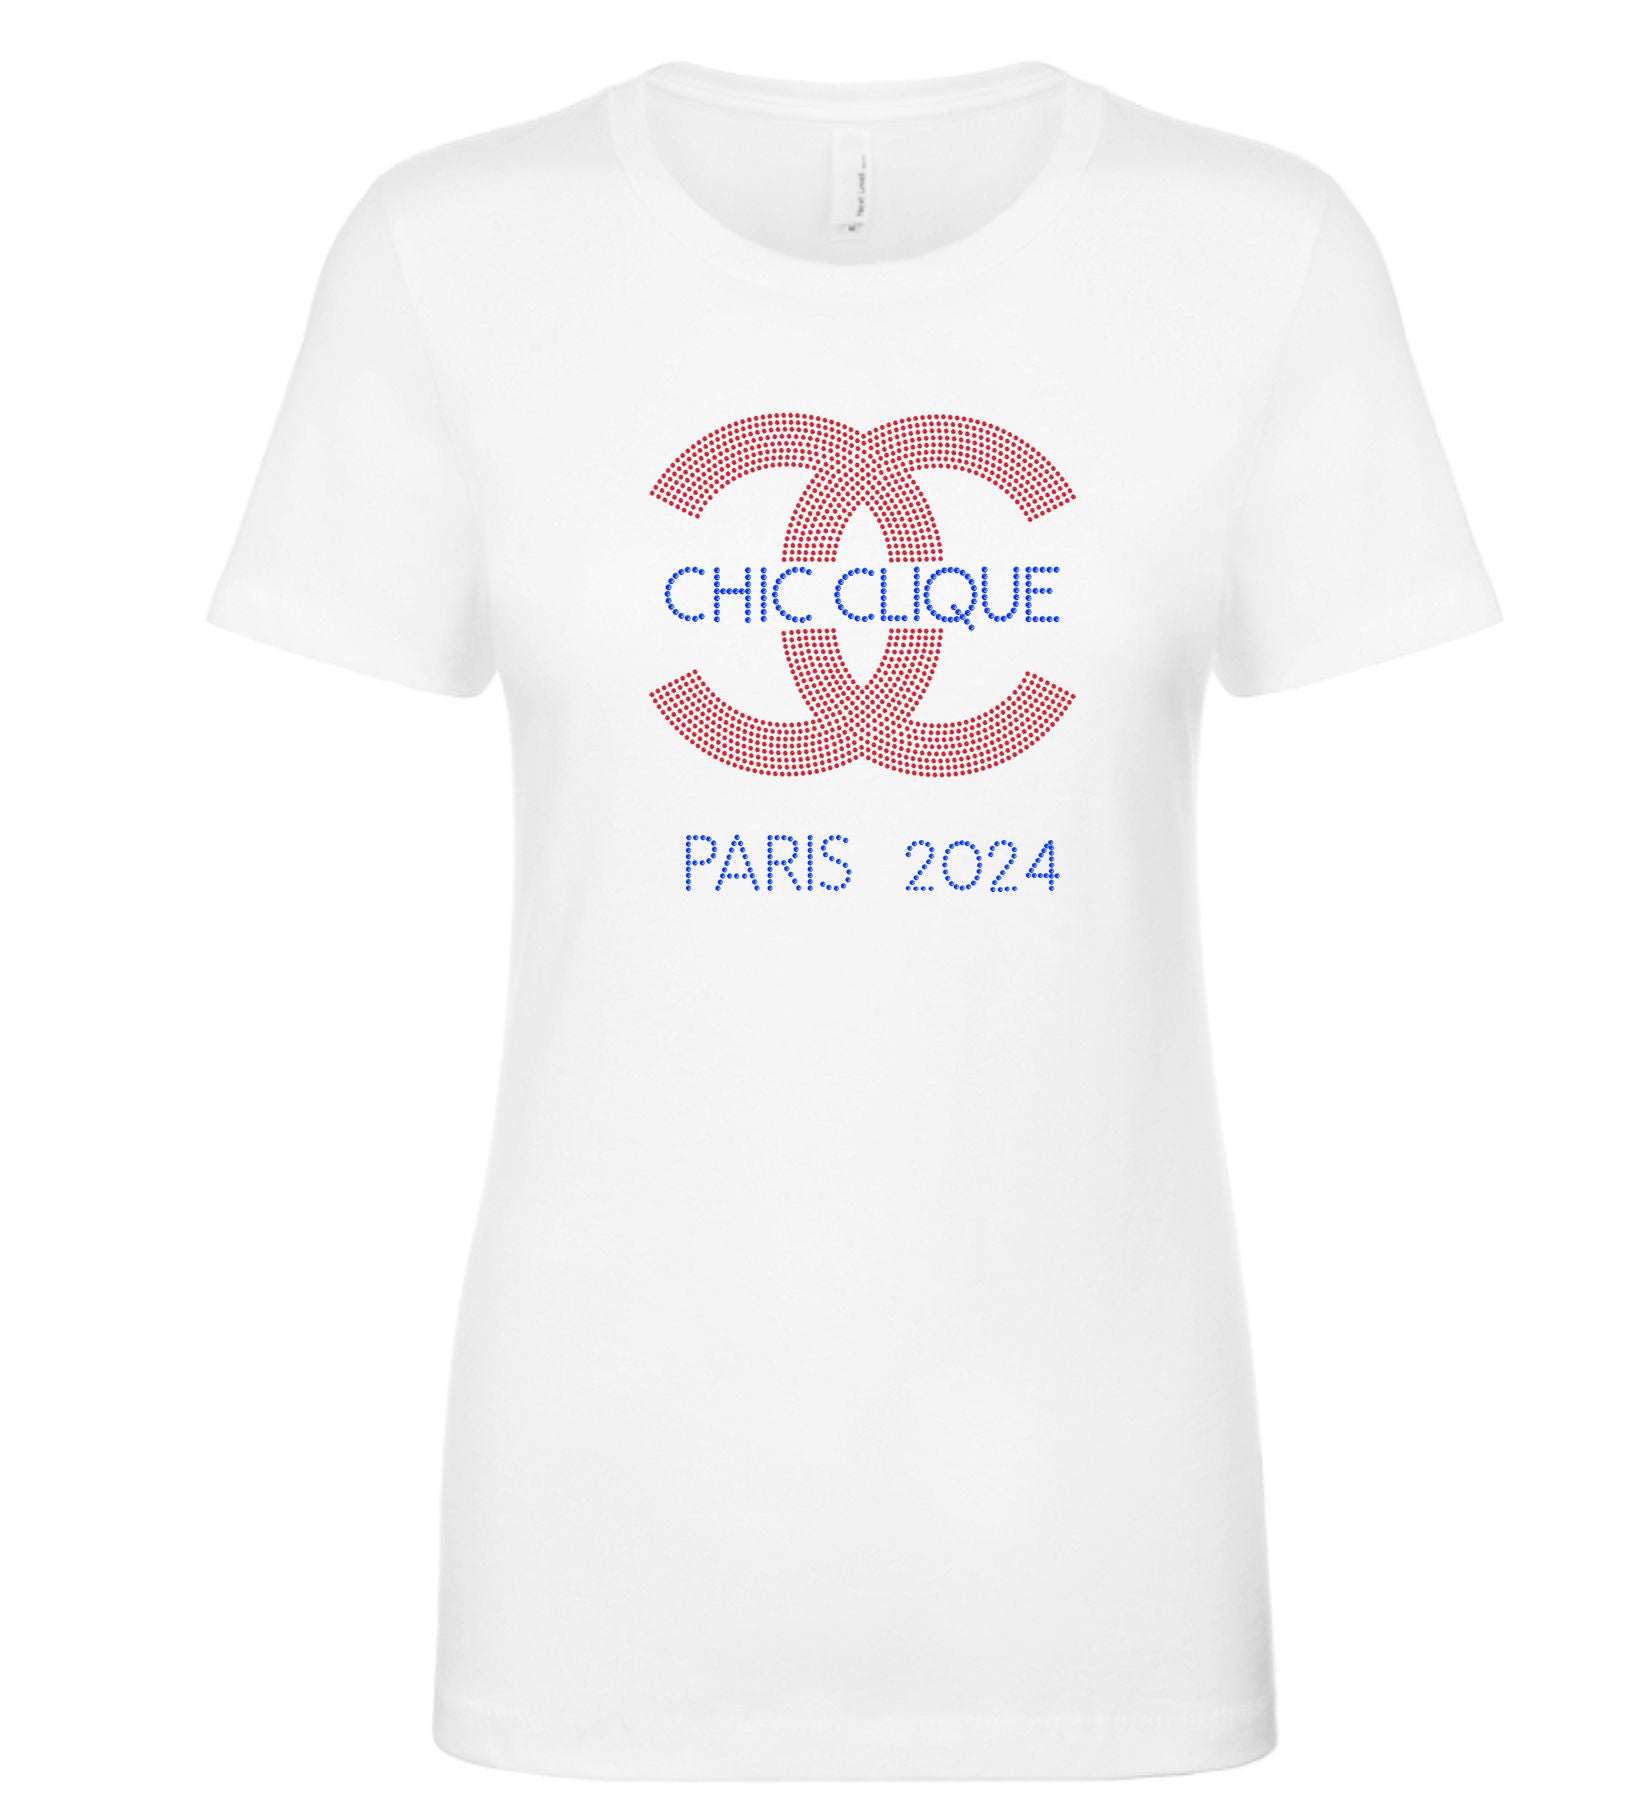 Chic Clique Rhinestone T-Shirt